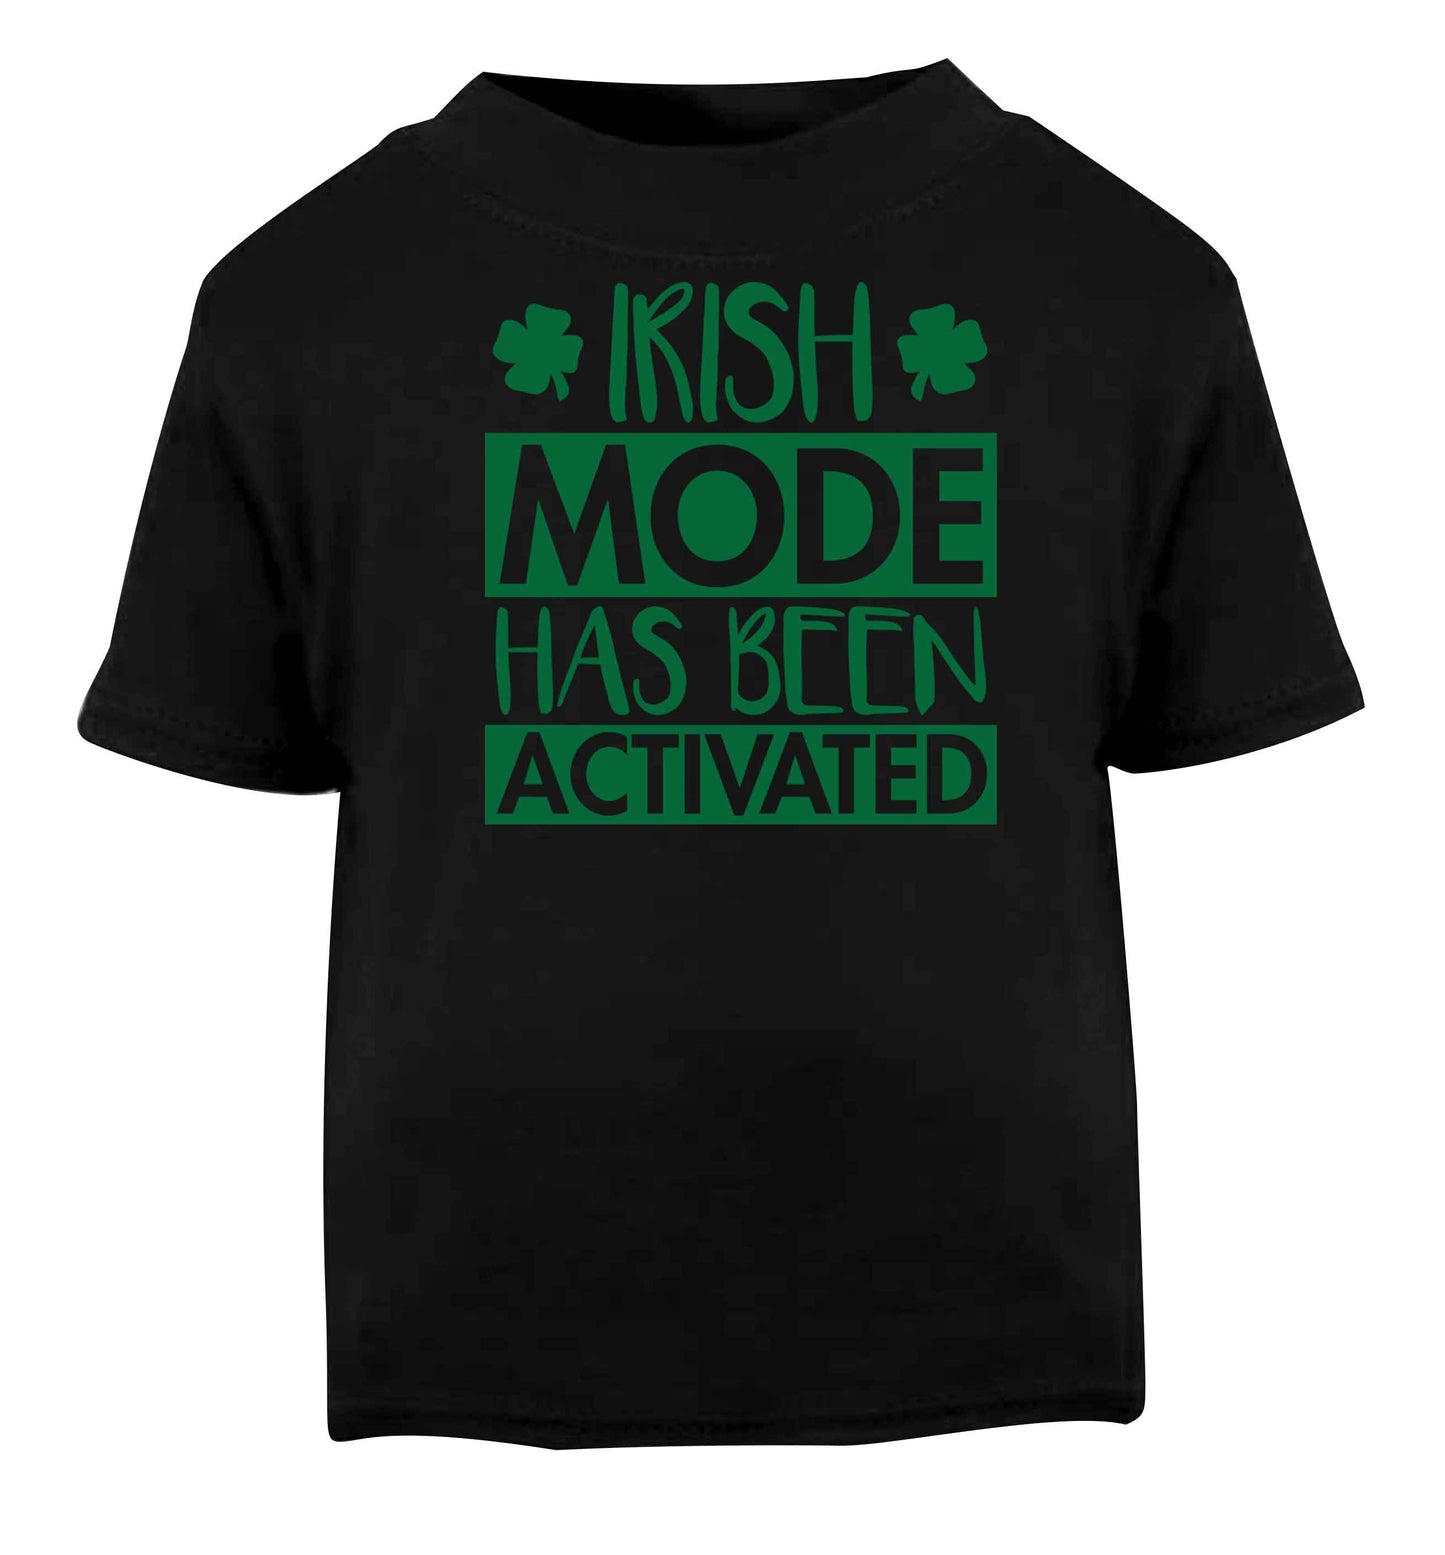 Irish mode has been activated Black baby toddler Tshirt 2 years